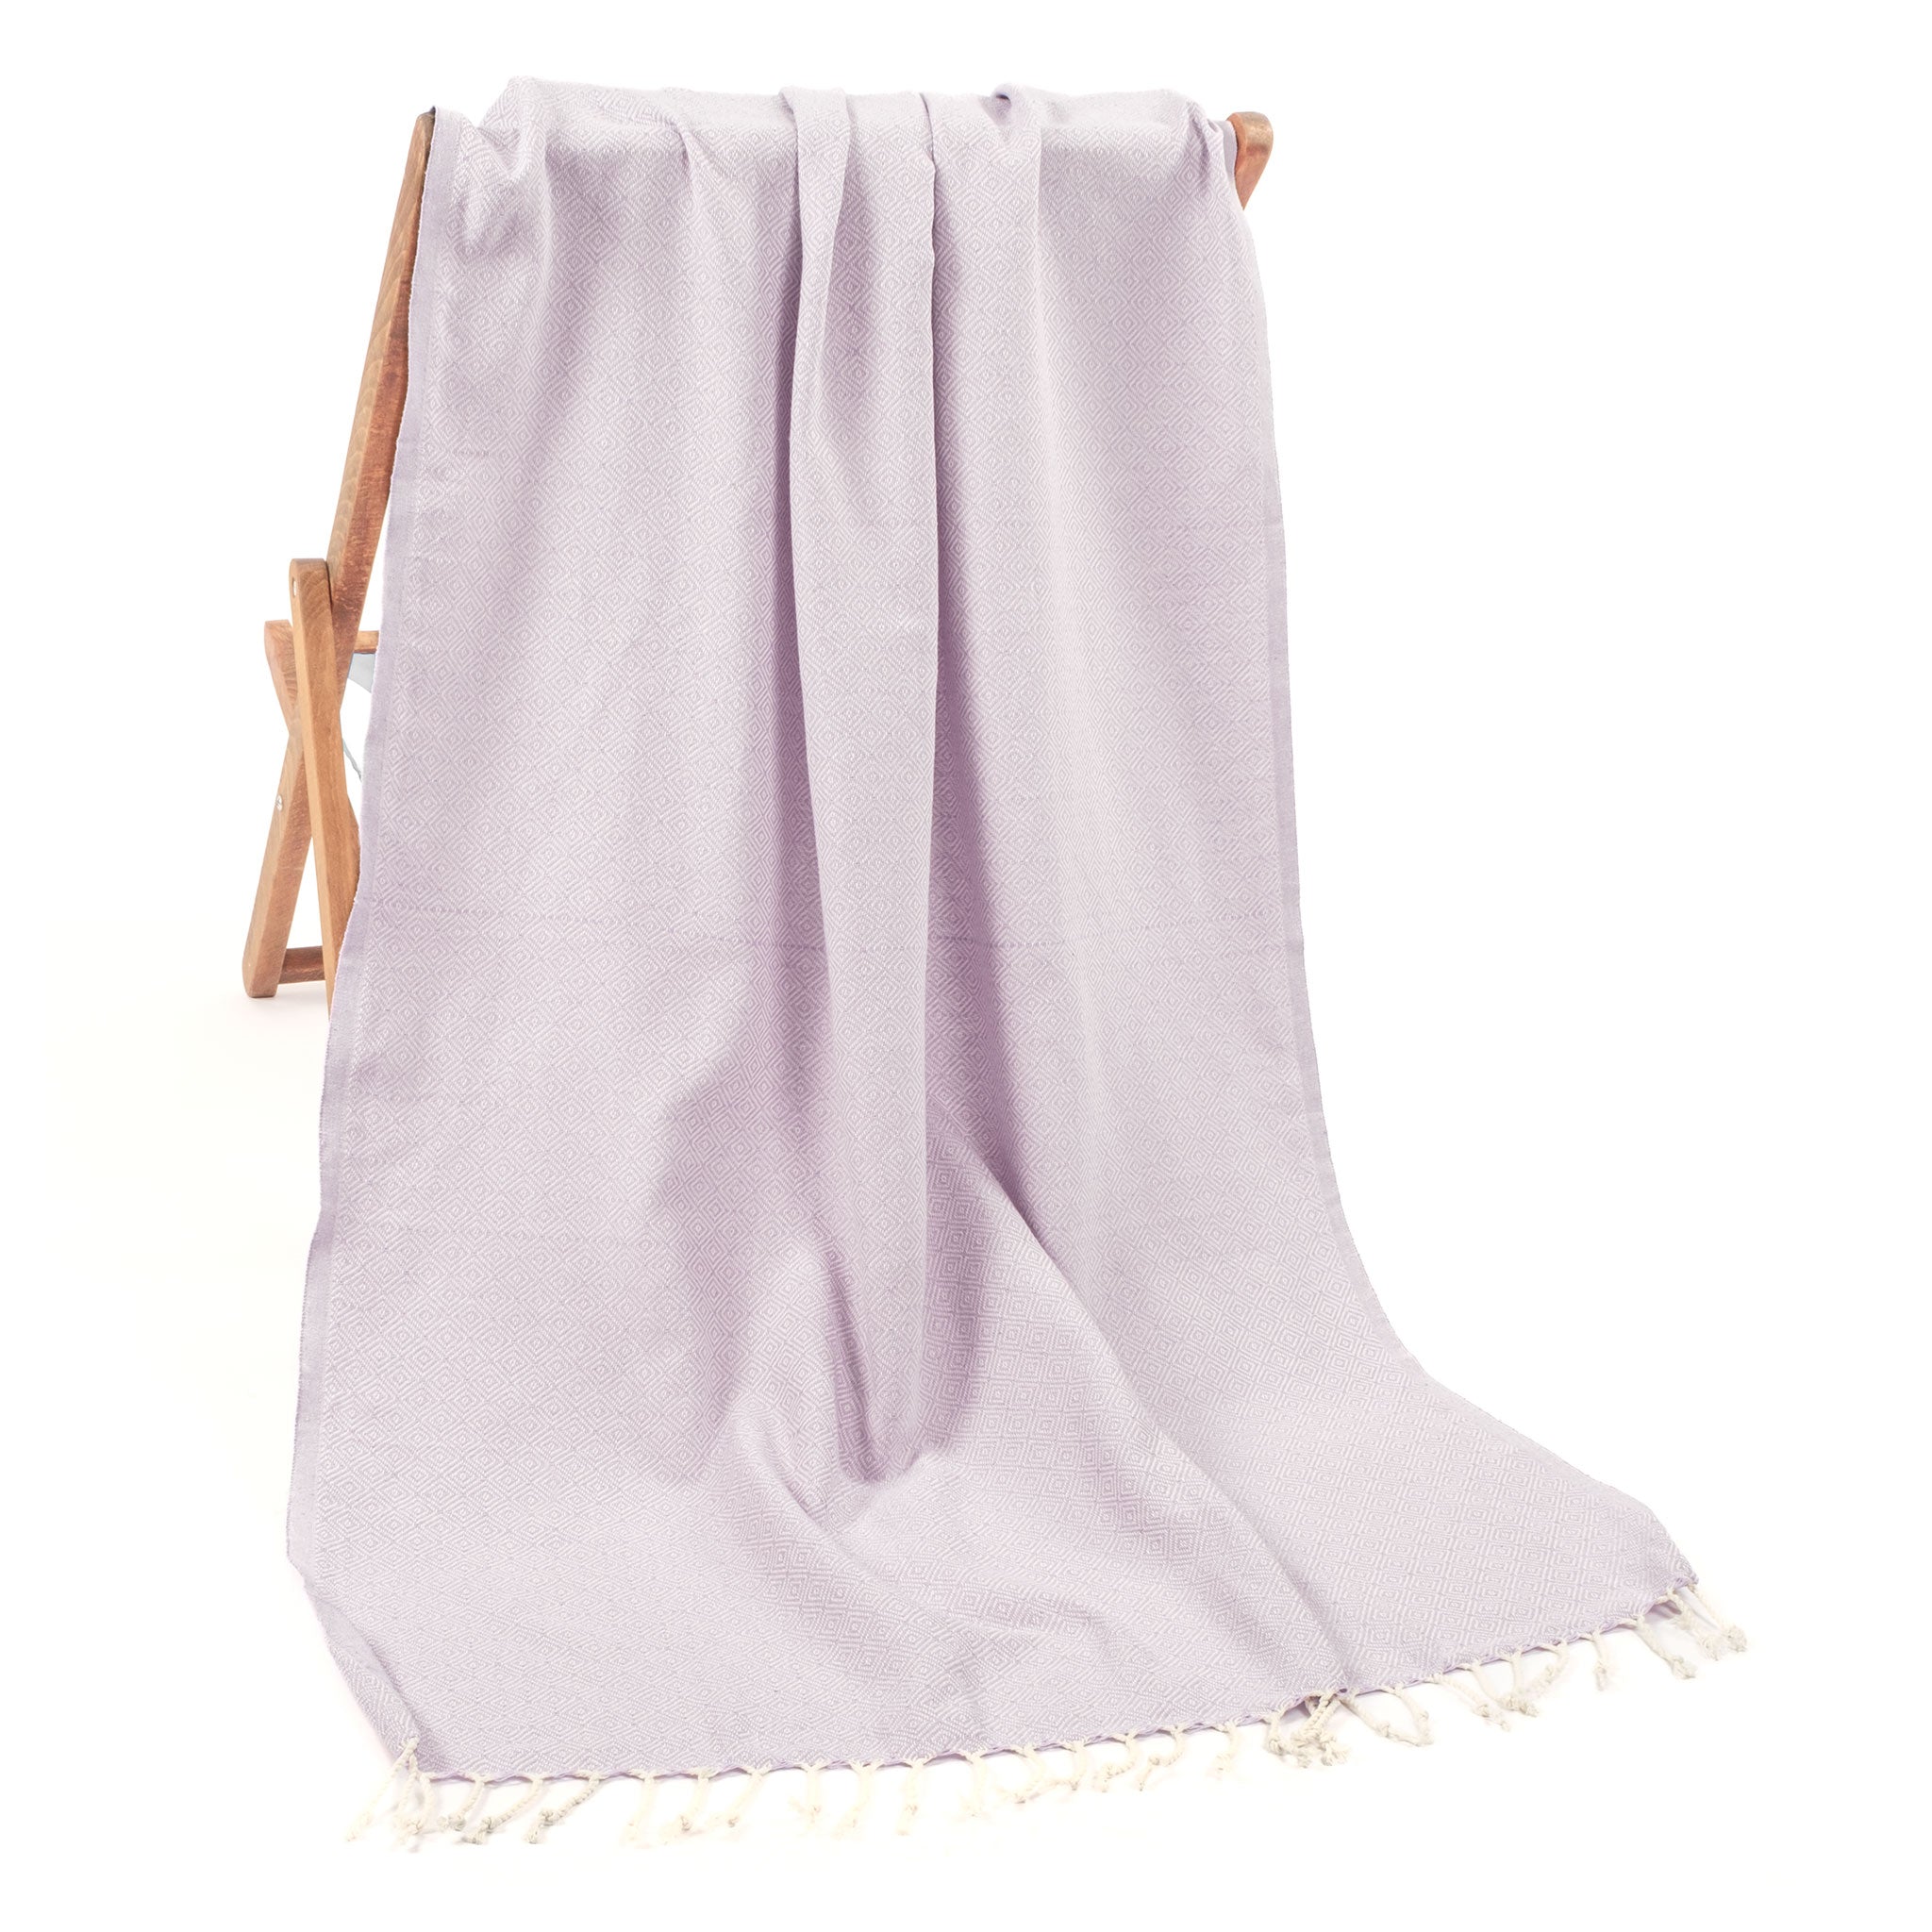 American Soft Linen - 100% Cotton Turkish Peshtemal Towels 40x70 Inches - Lilac - 1